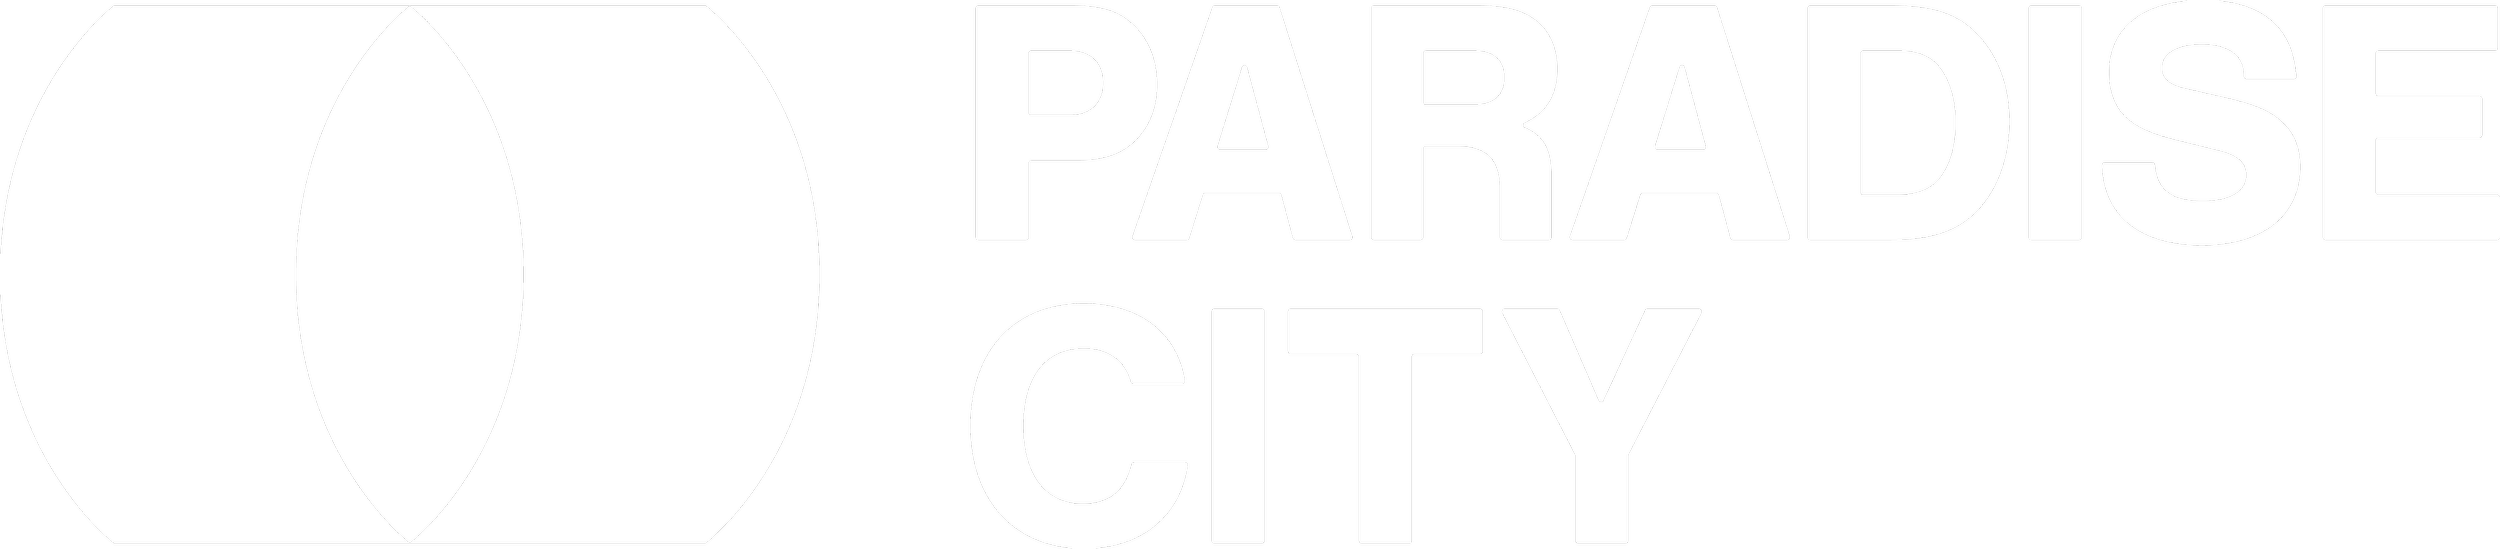 Paradise City - VVS Films